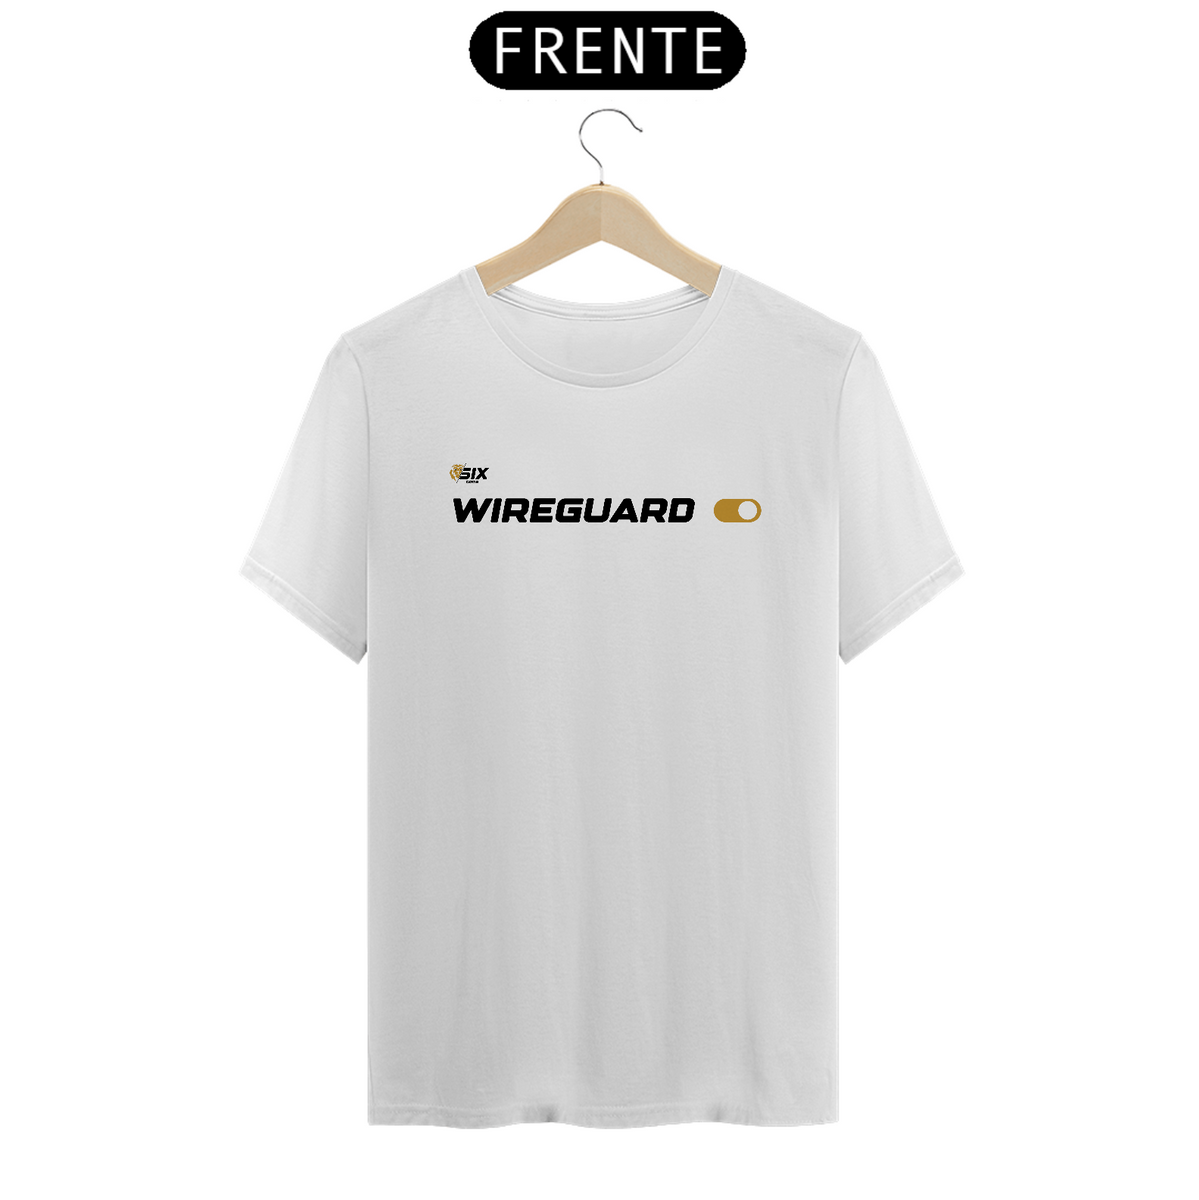 Nome do produto: Camisa SixCore Branca - Wireguard